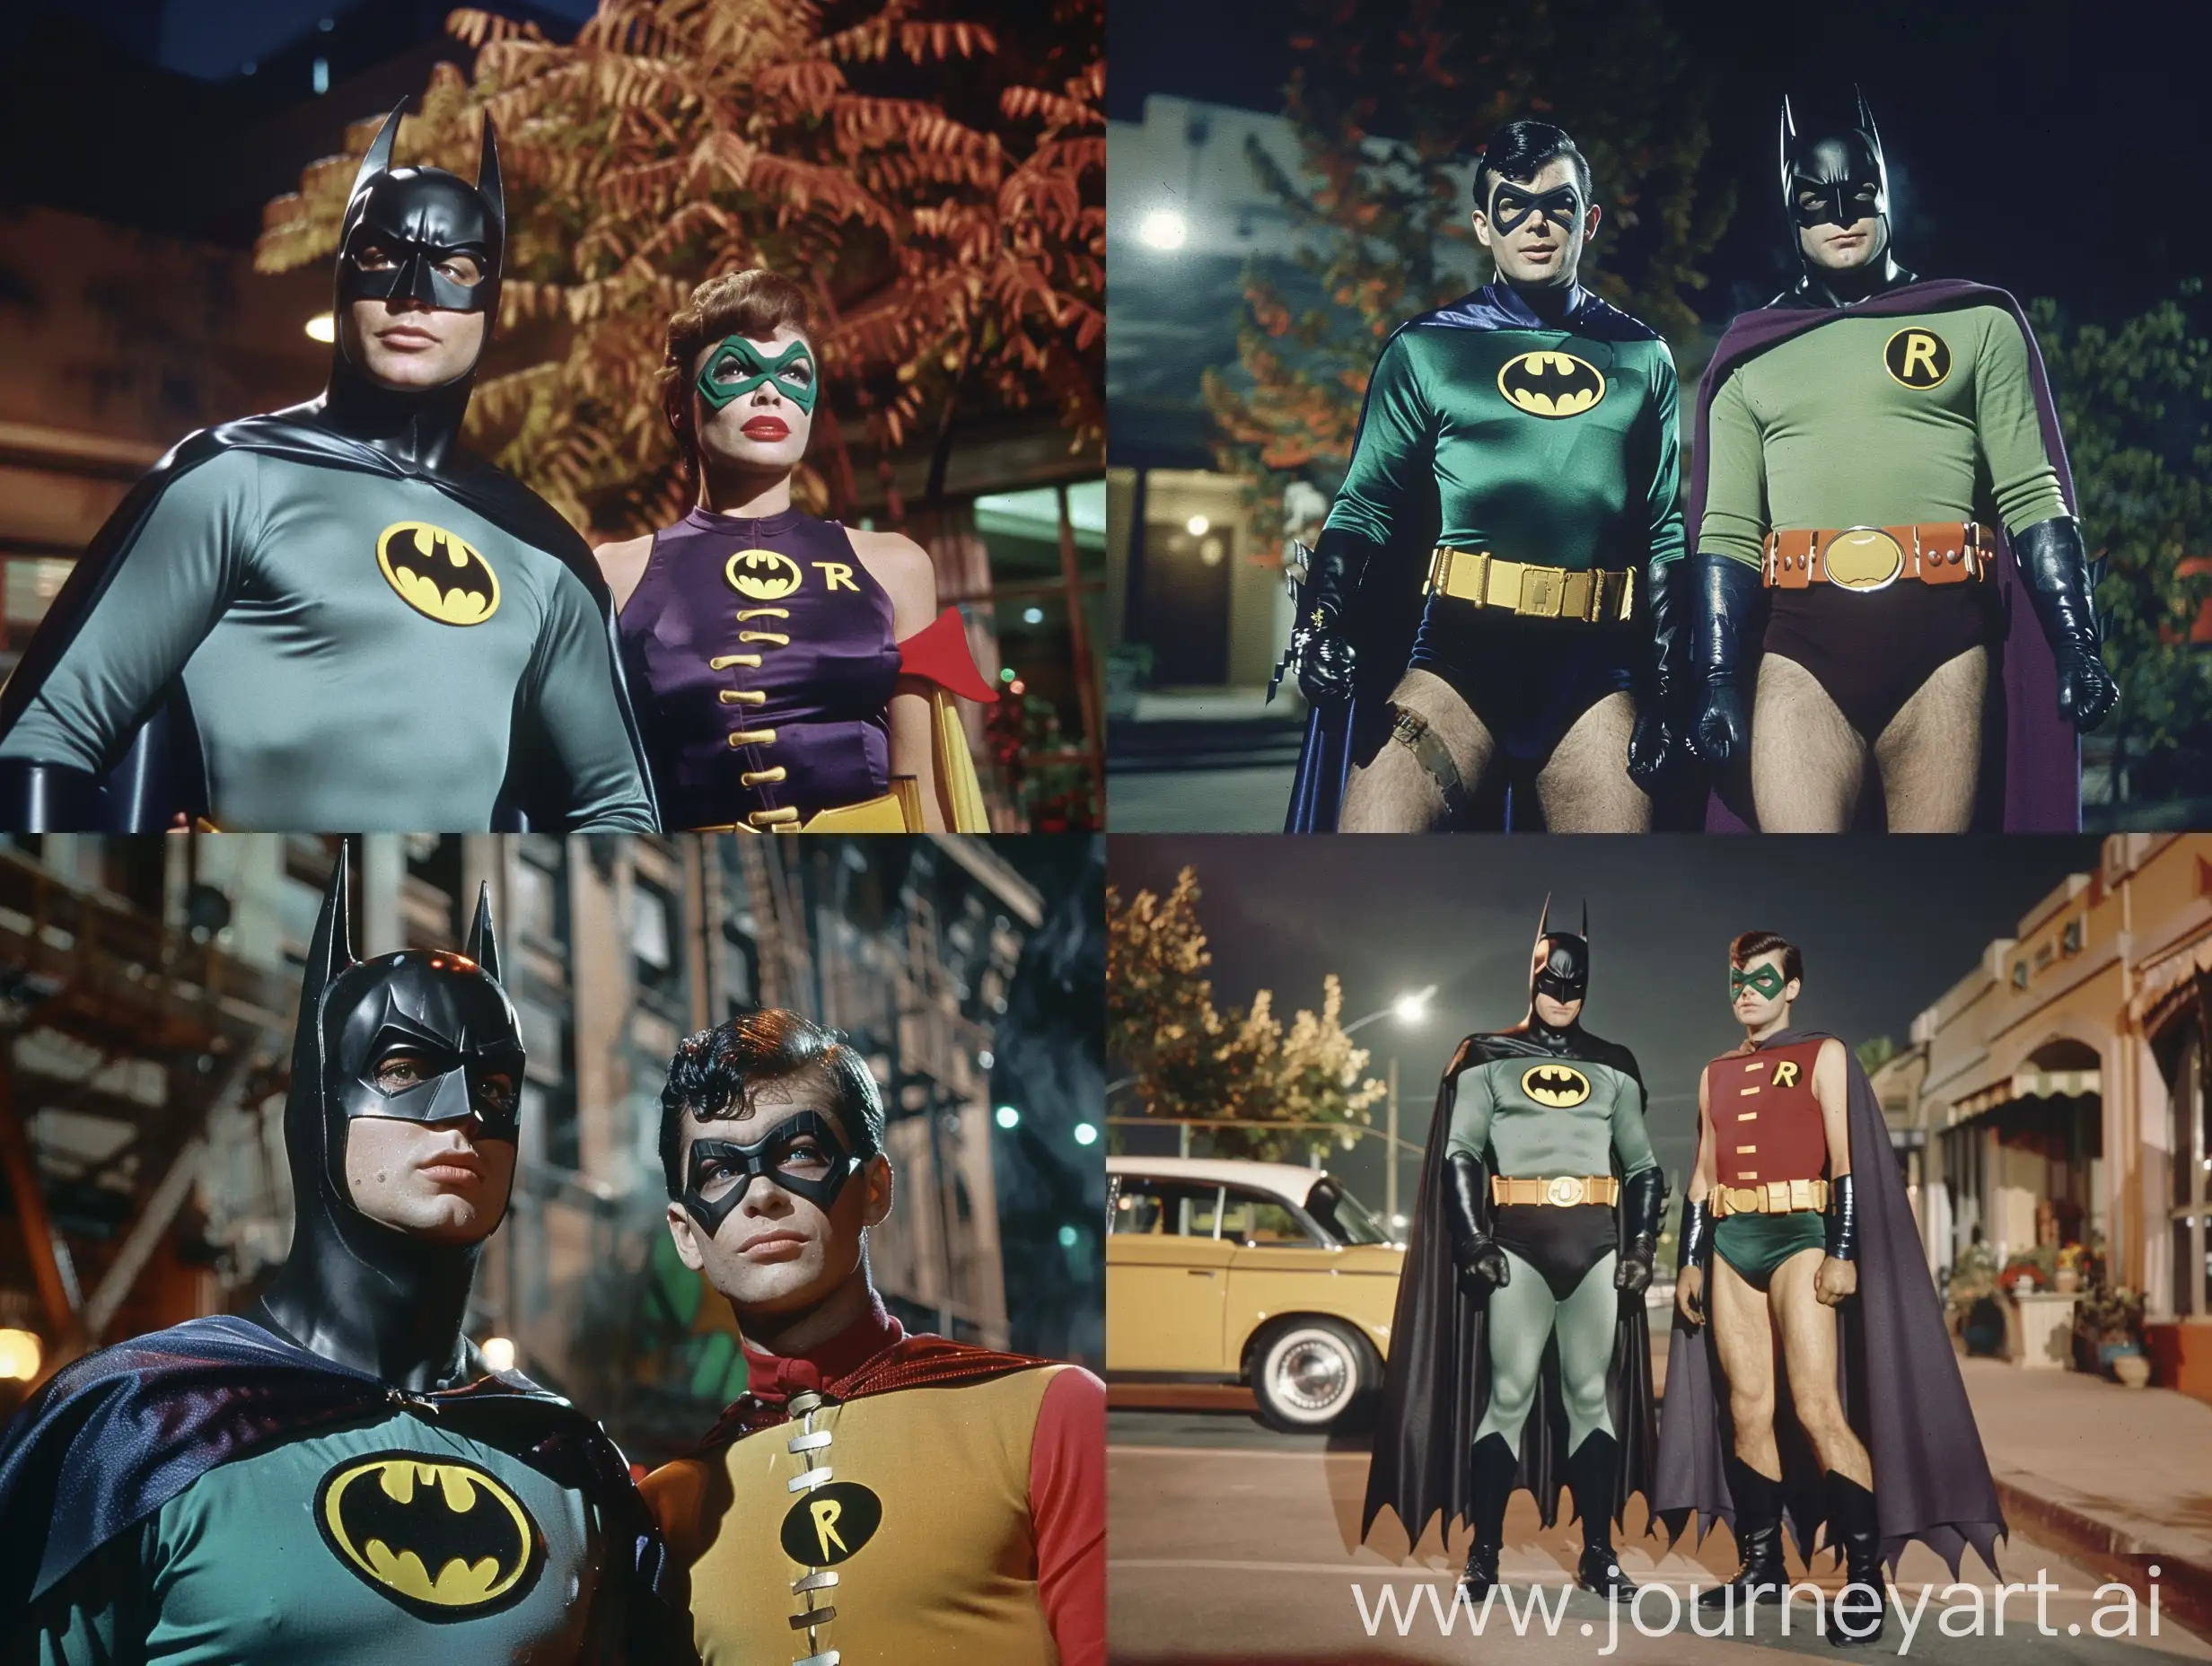 Dynamic-Duo-Batman-and-Robin-Patrol-Gotham-City-at-Night-in-Vivid-1950s-Superpanavision-70-Color-Image